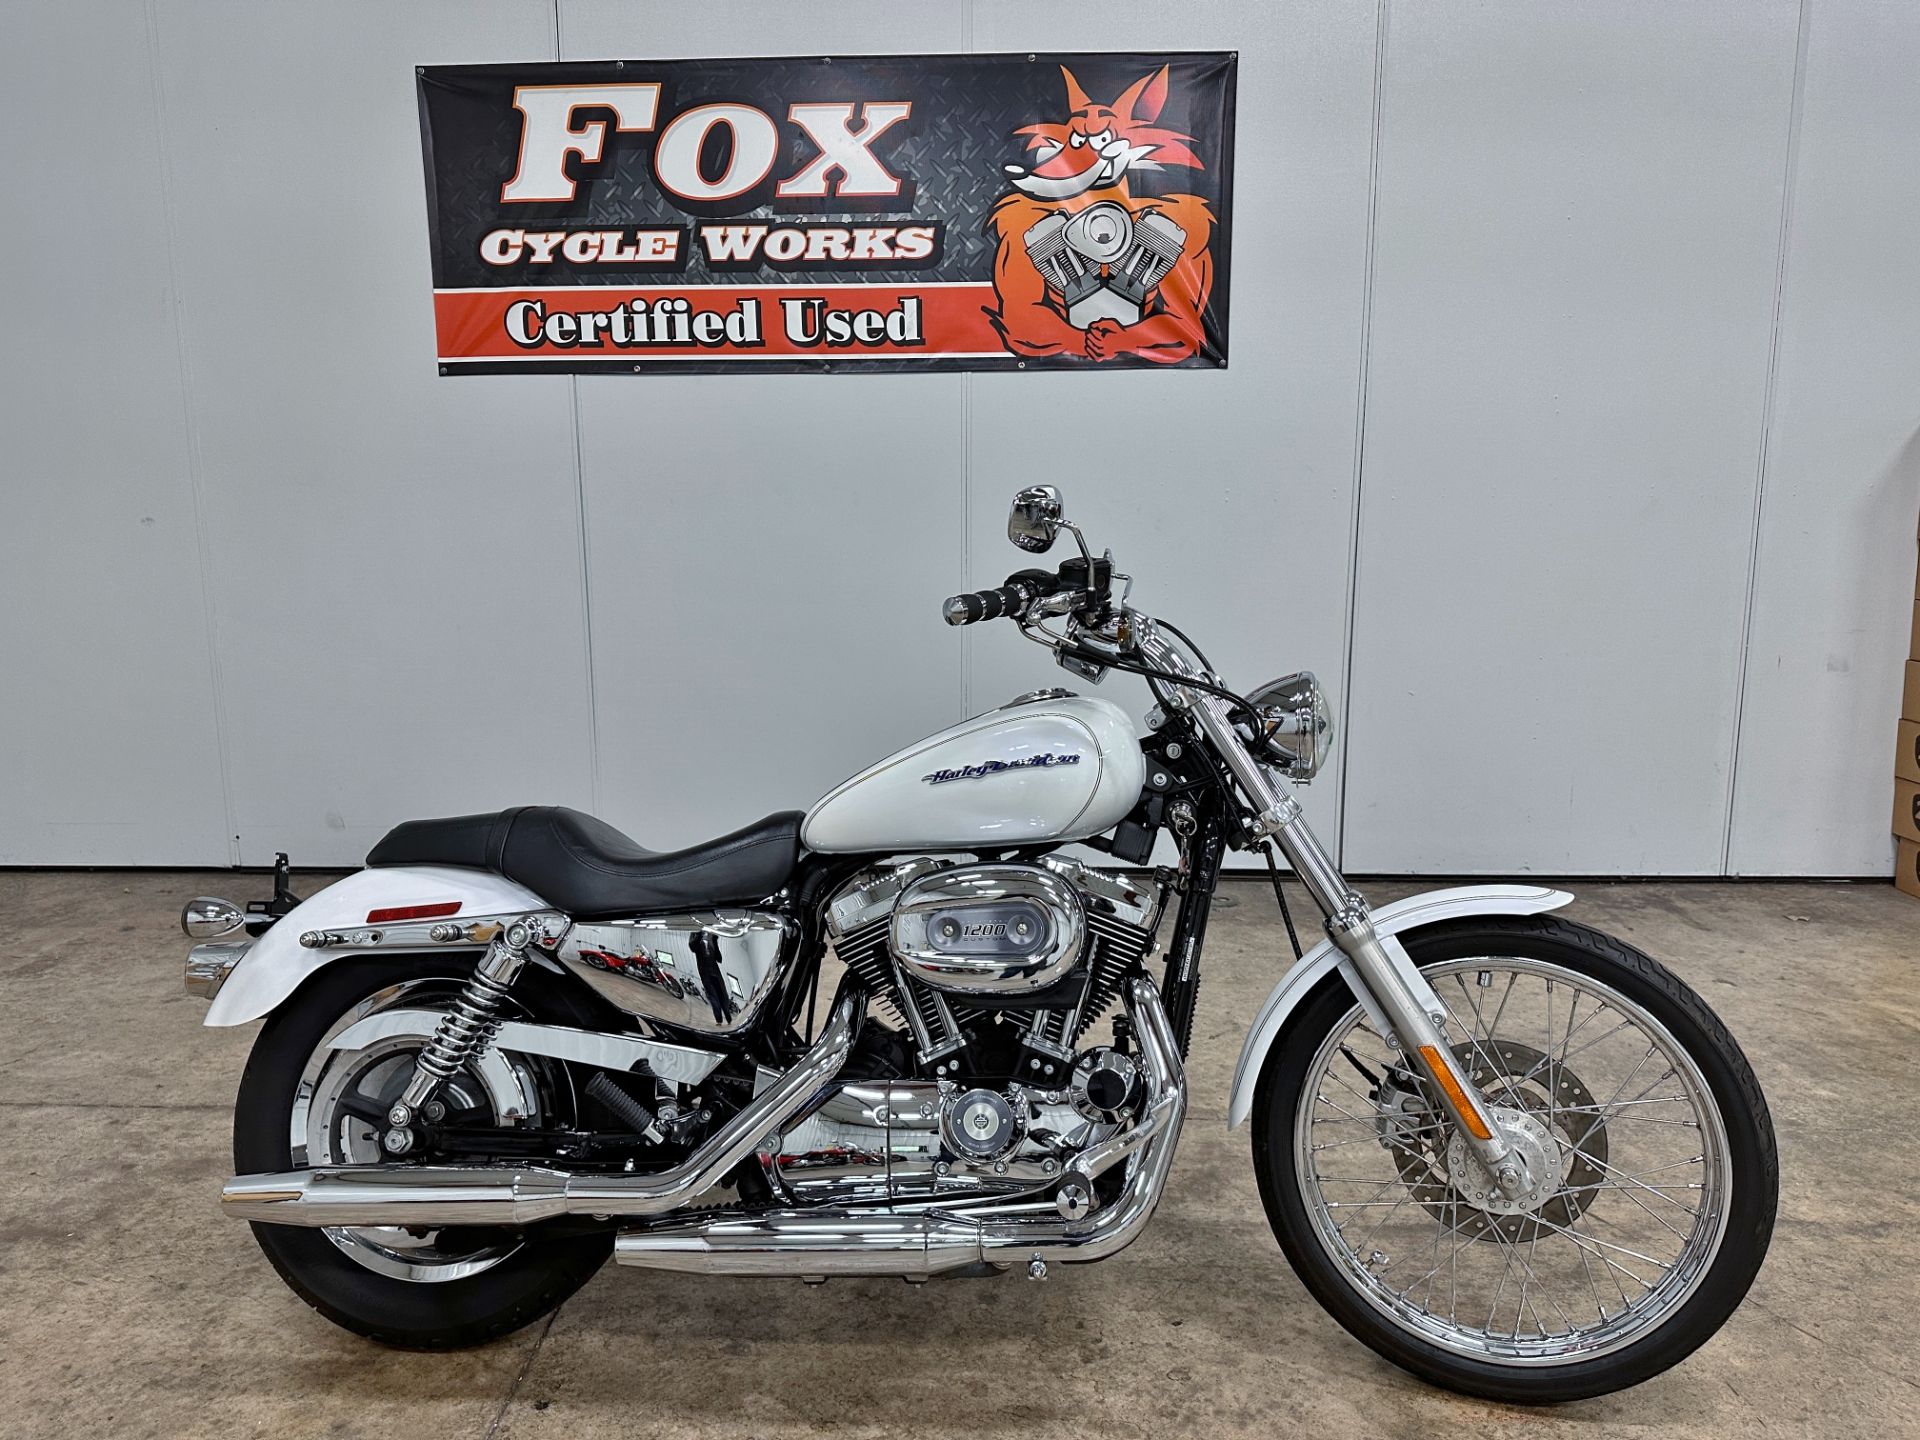 2005 Harley-Davidson Sportster® XL 1200 Custom in Sandusky, Ohio - Photo 1